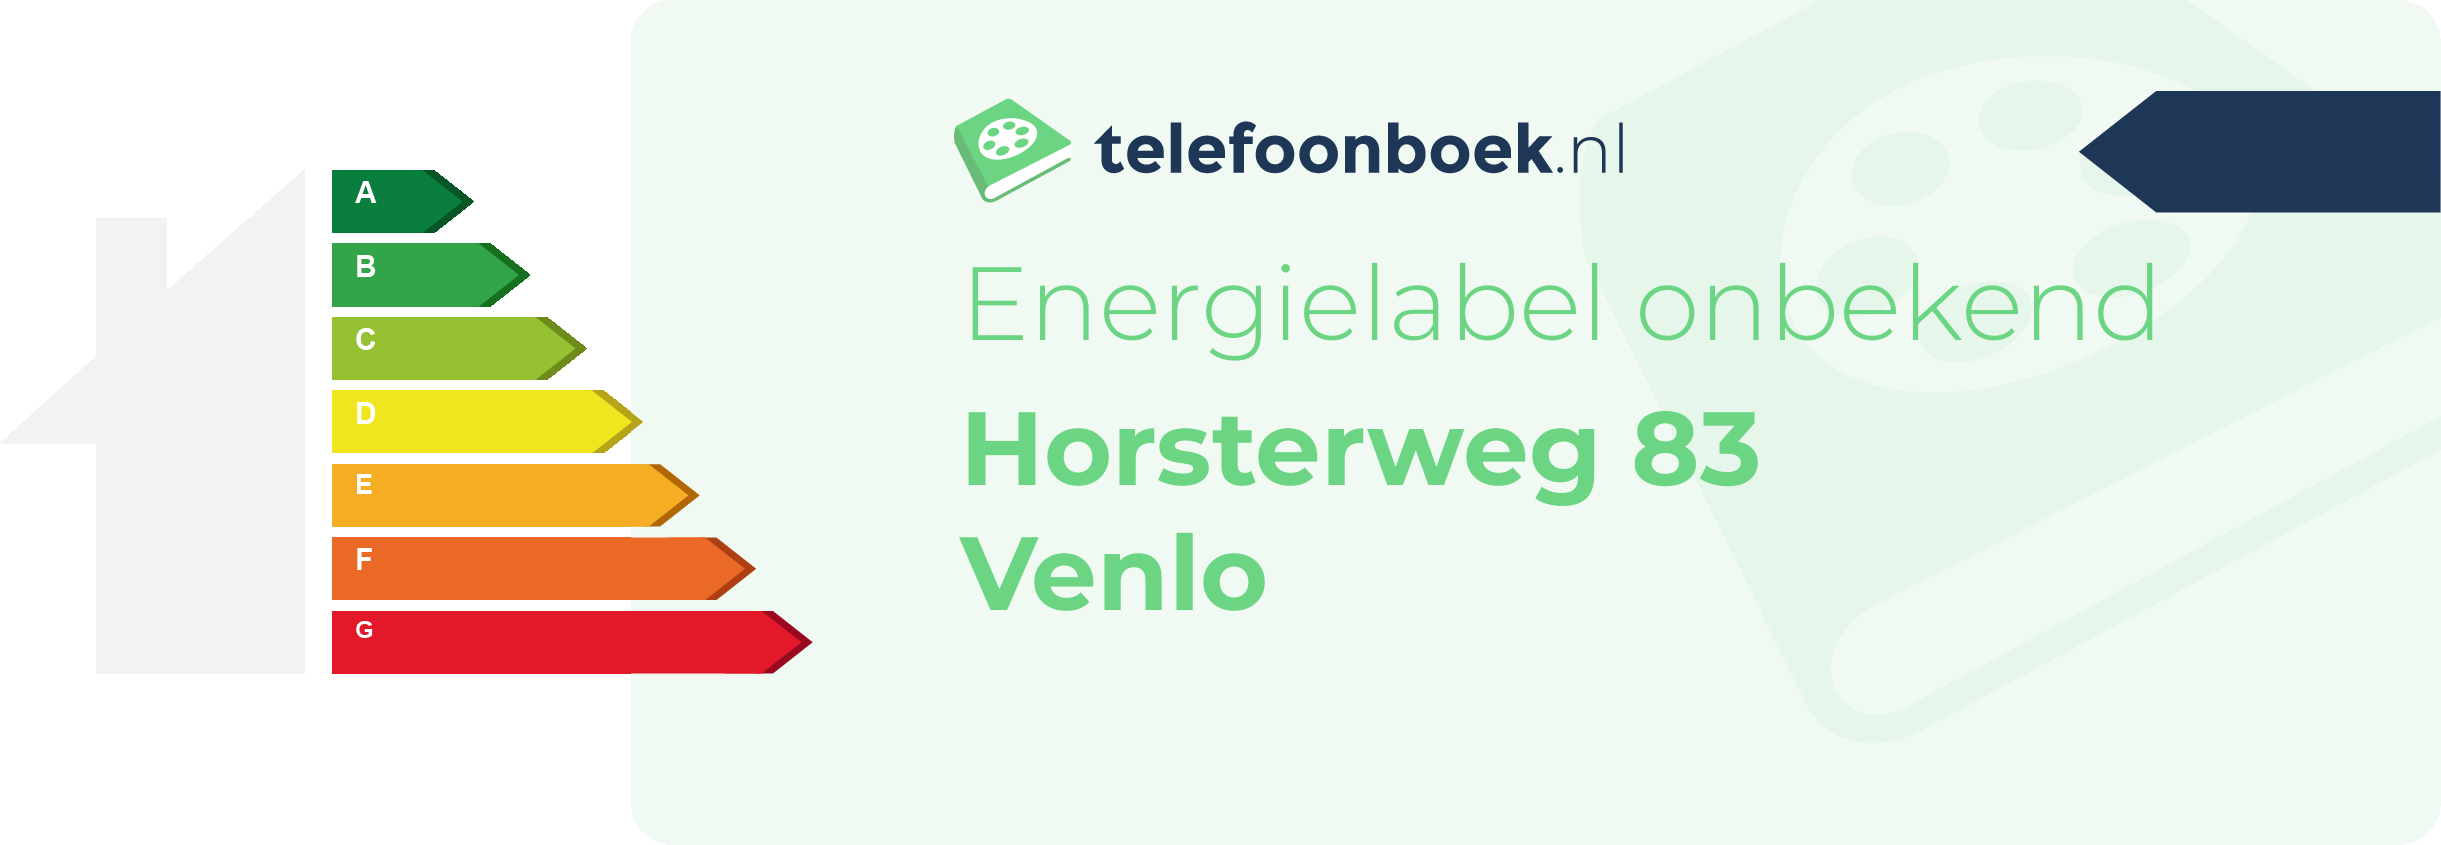 Energielabel Horsterweg 83 Venlo